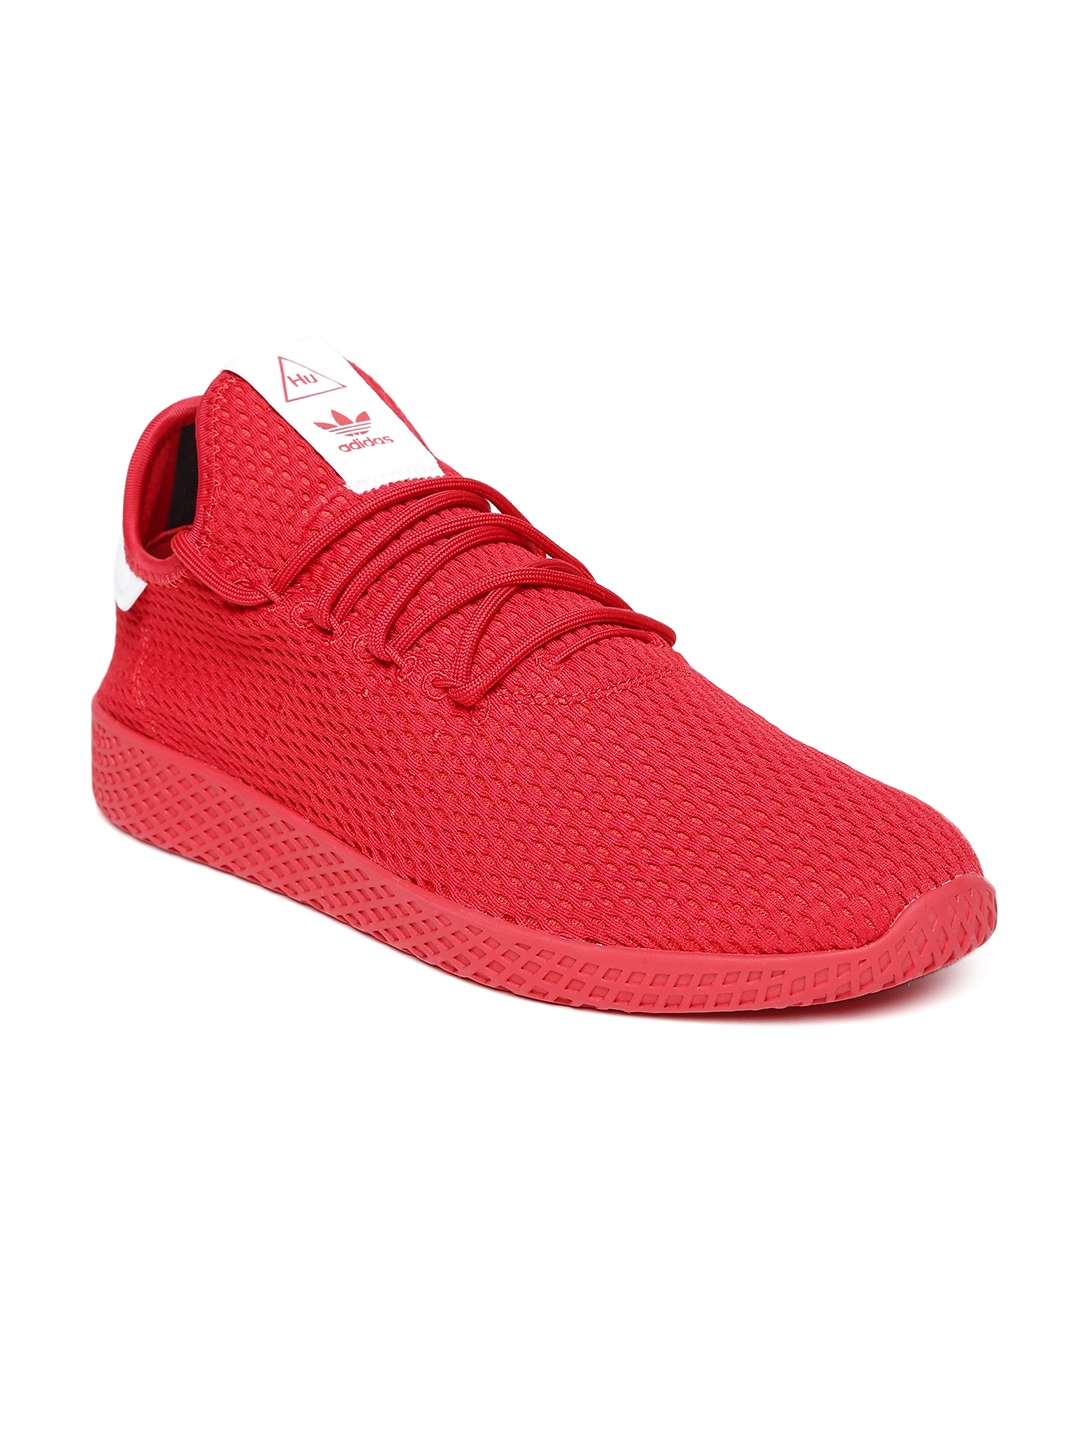 Red Pharrell William HU Tennis Shoes 